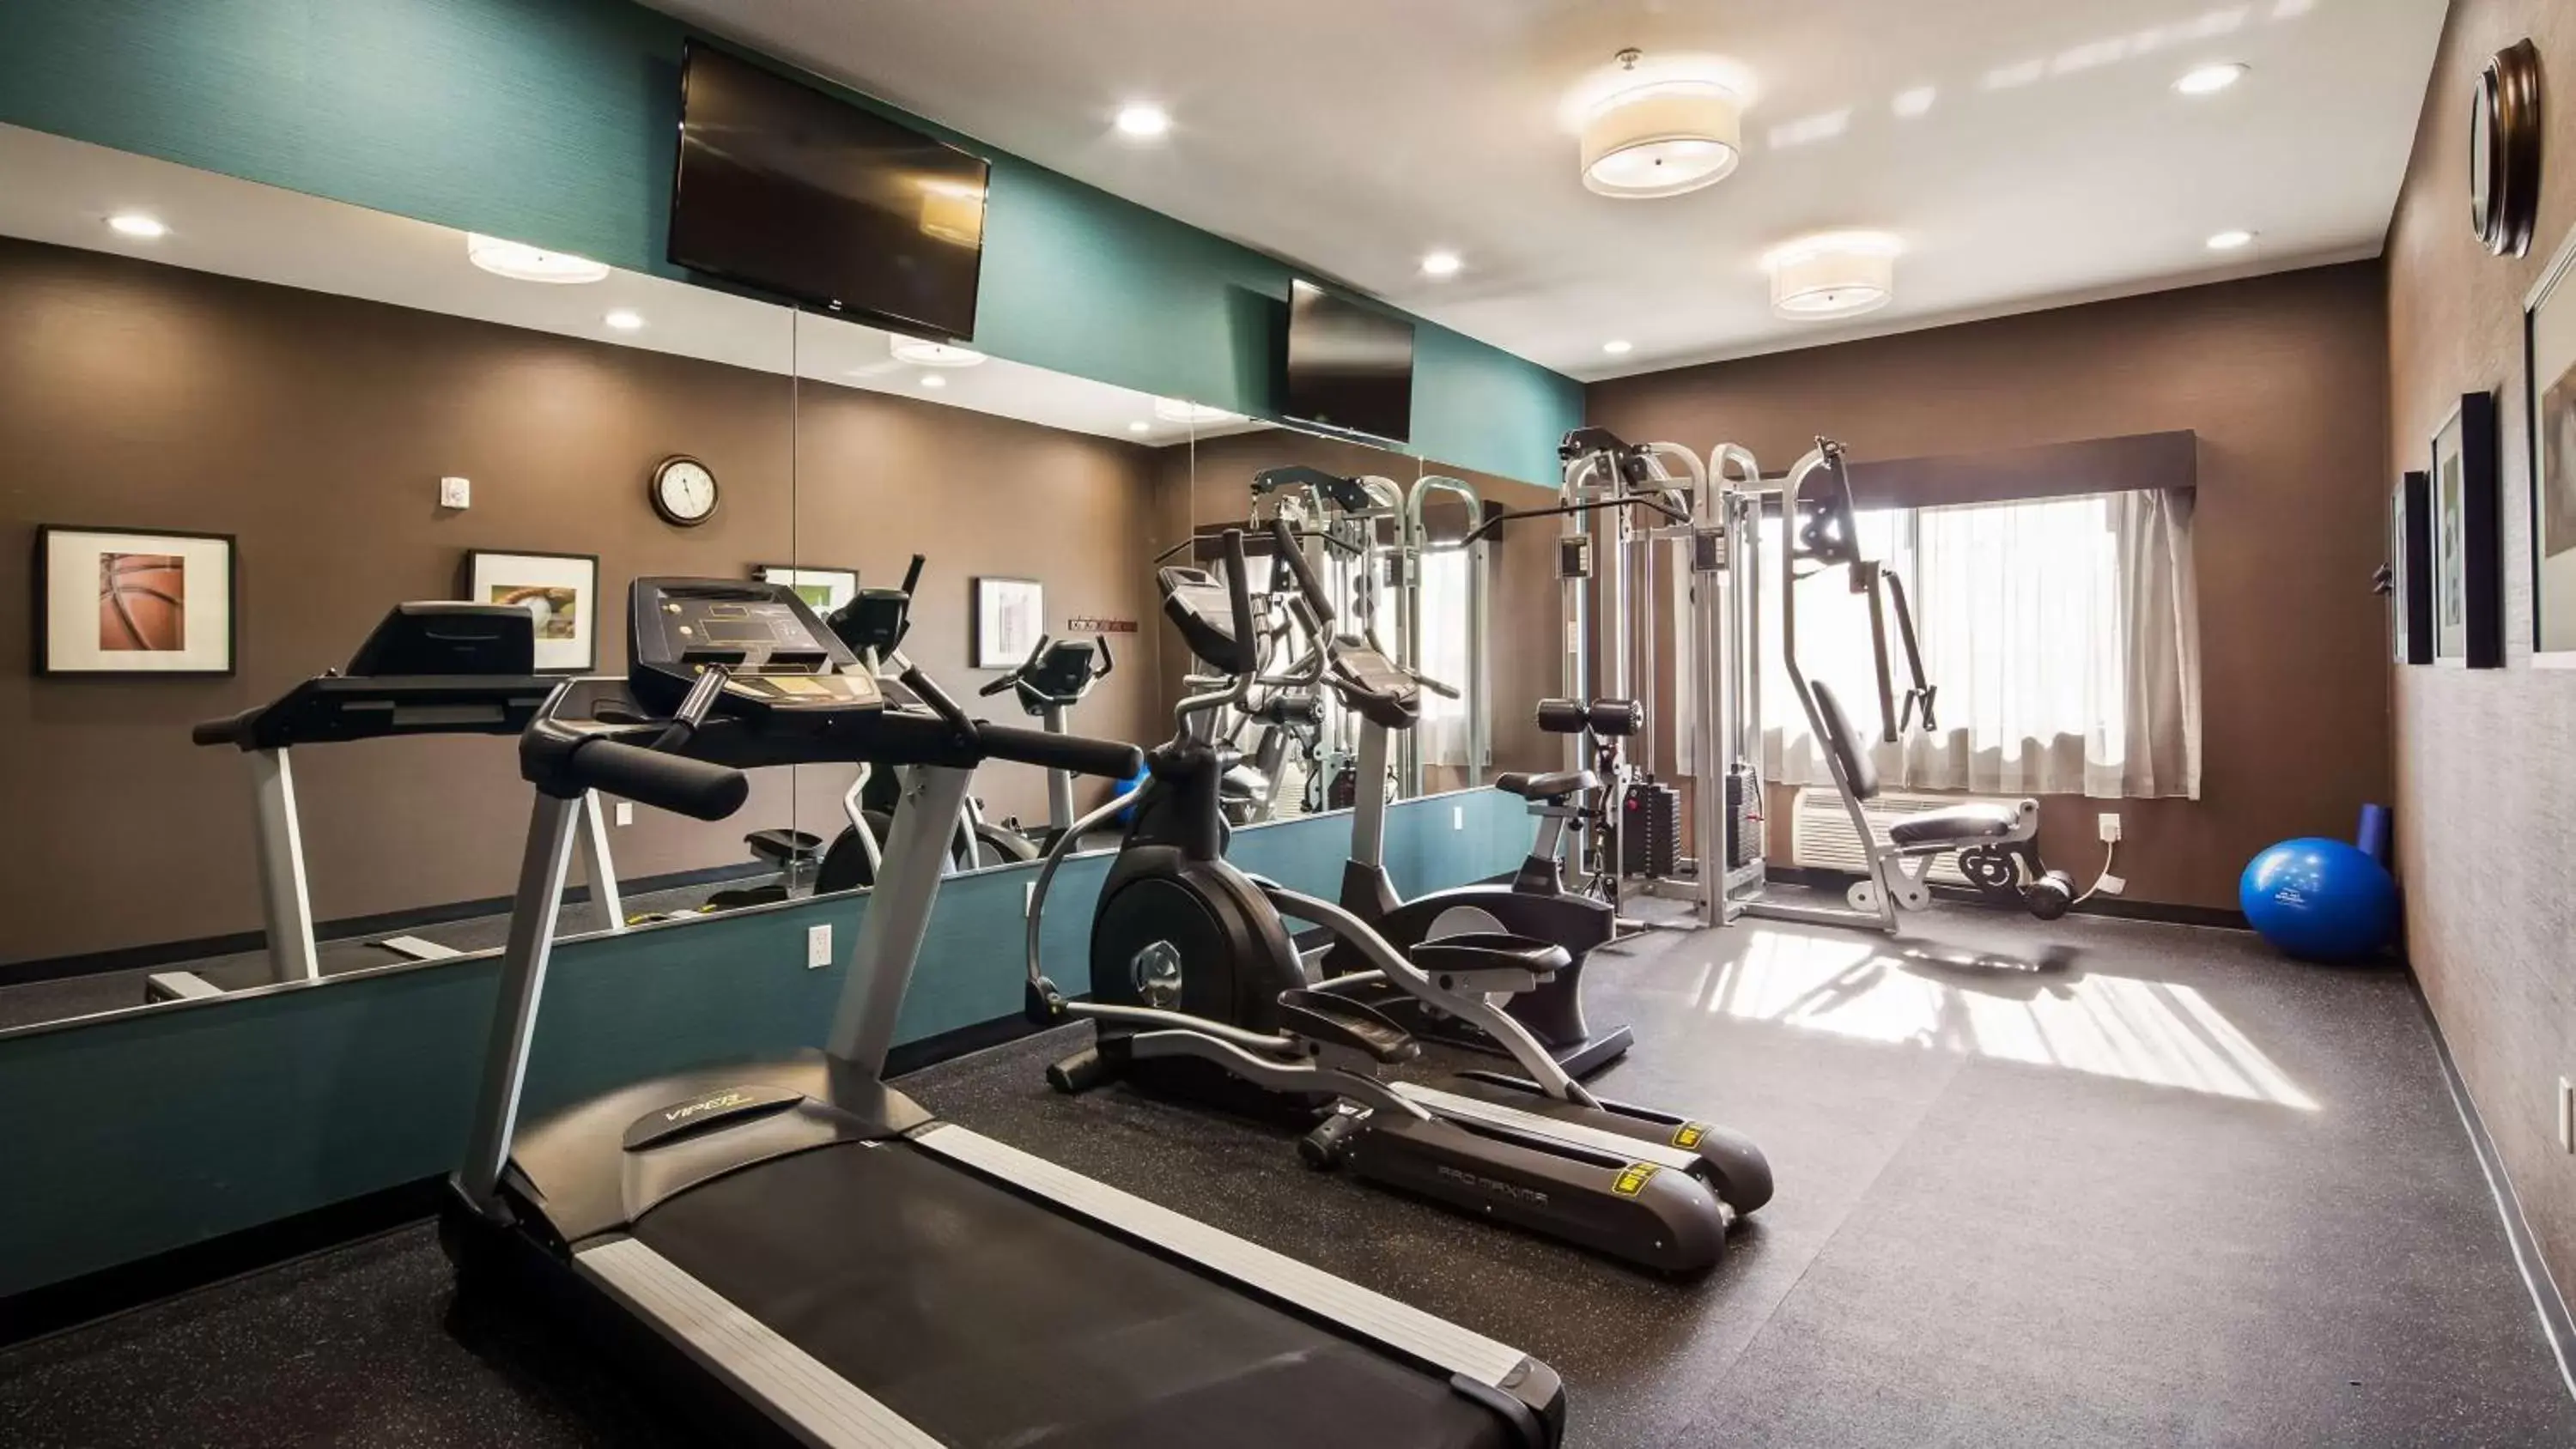 Fitness centre/facilities, Fitness Center/Facilities in Best Western Plus Taft Inn